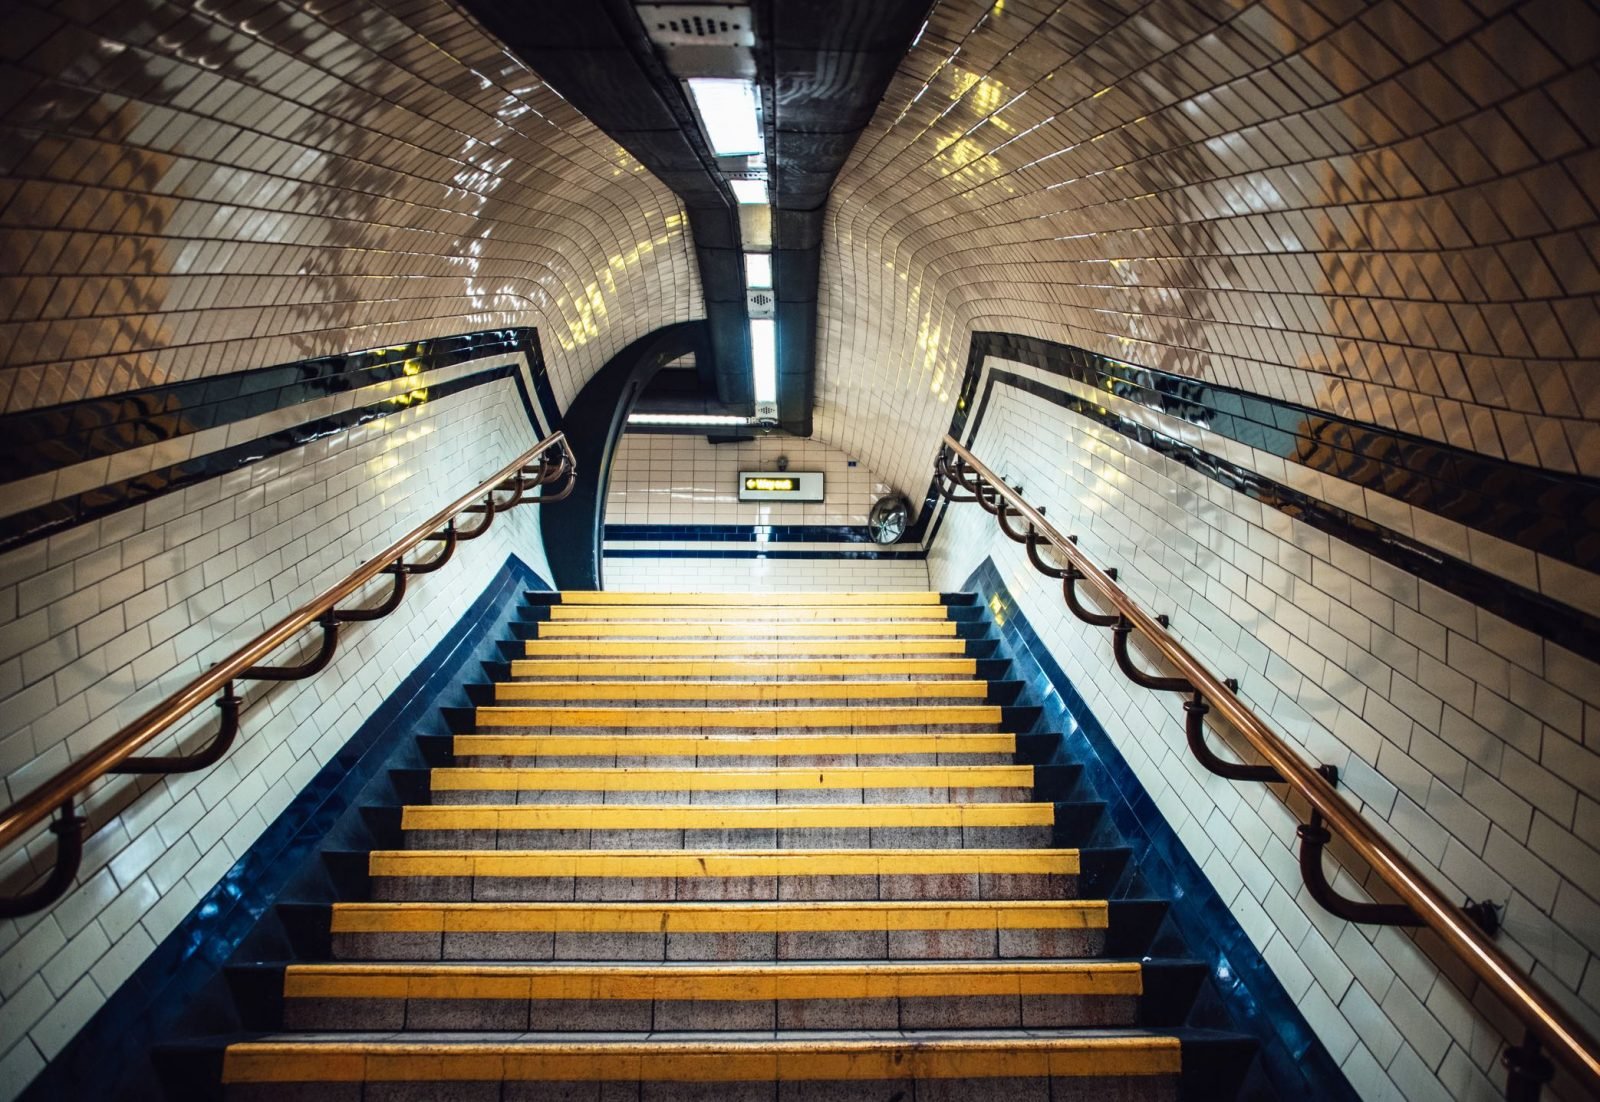 A stairway on a London Underground station